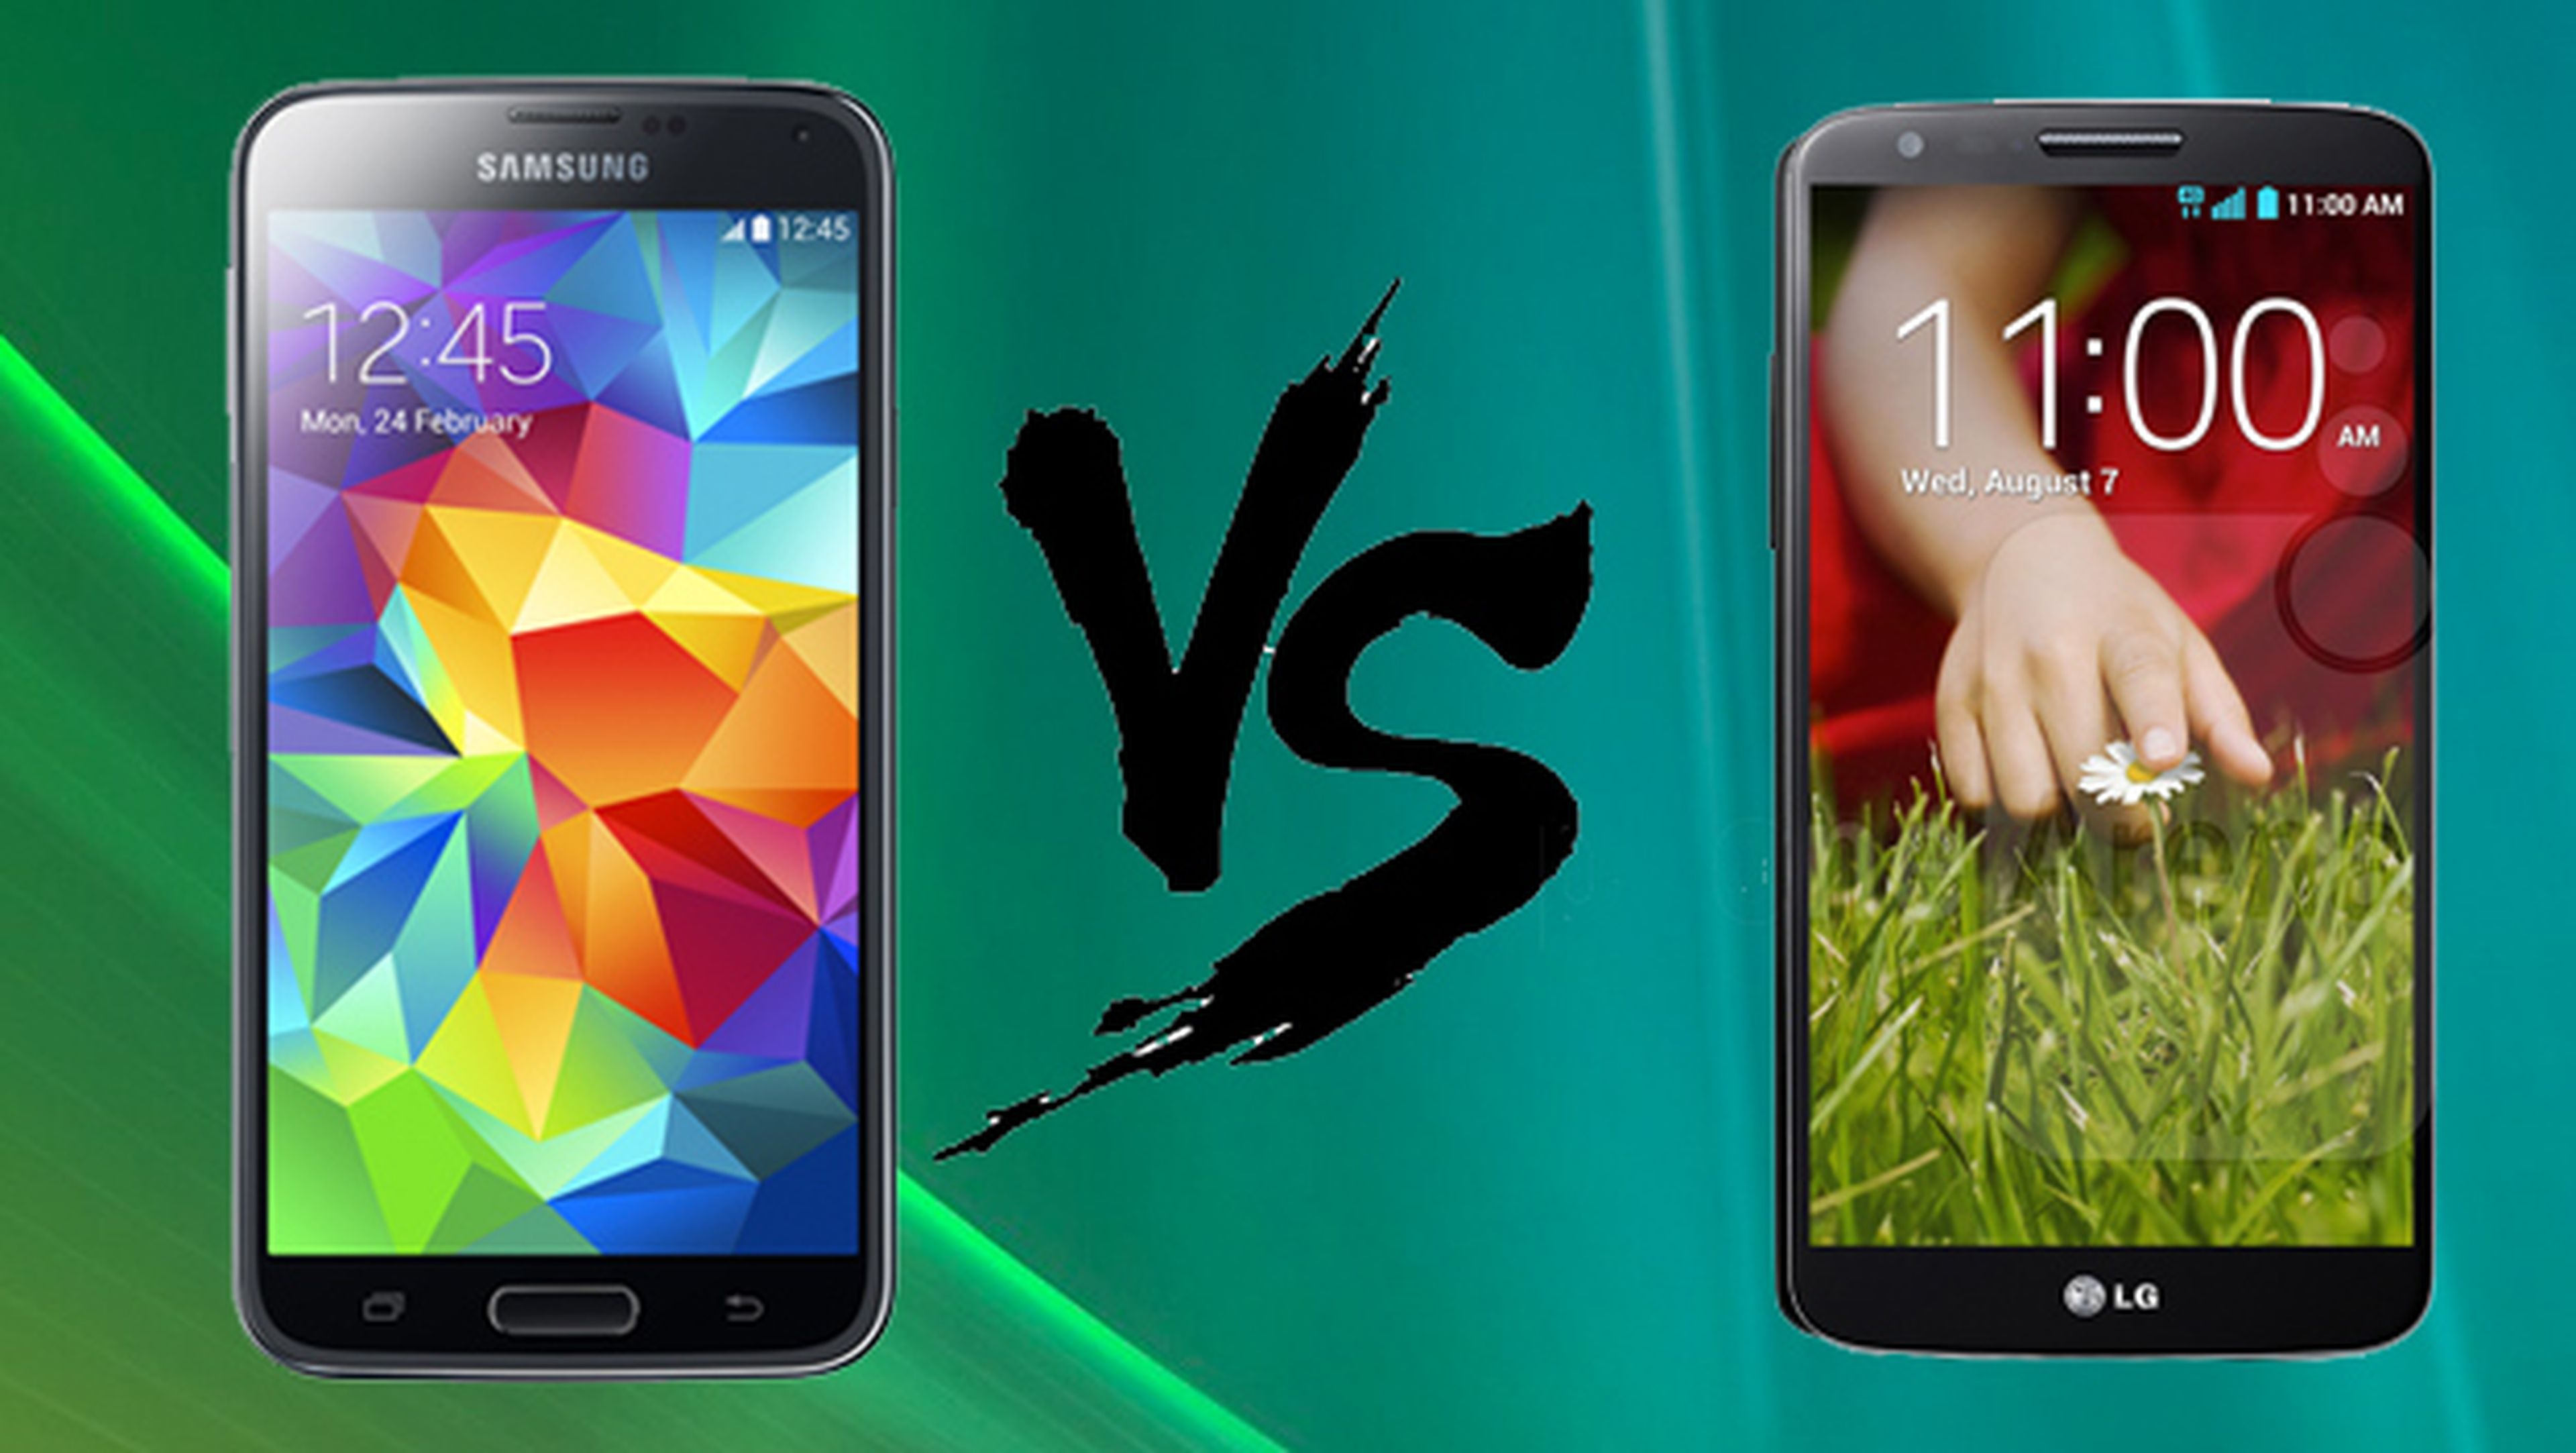 Samsung Galaxy S5 vs LG G2. Comparativa